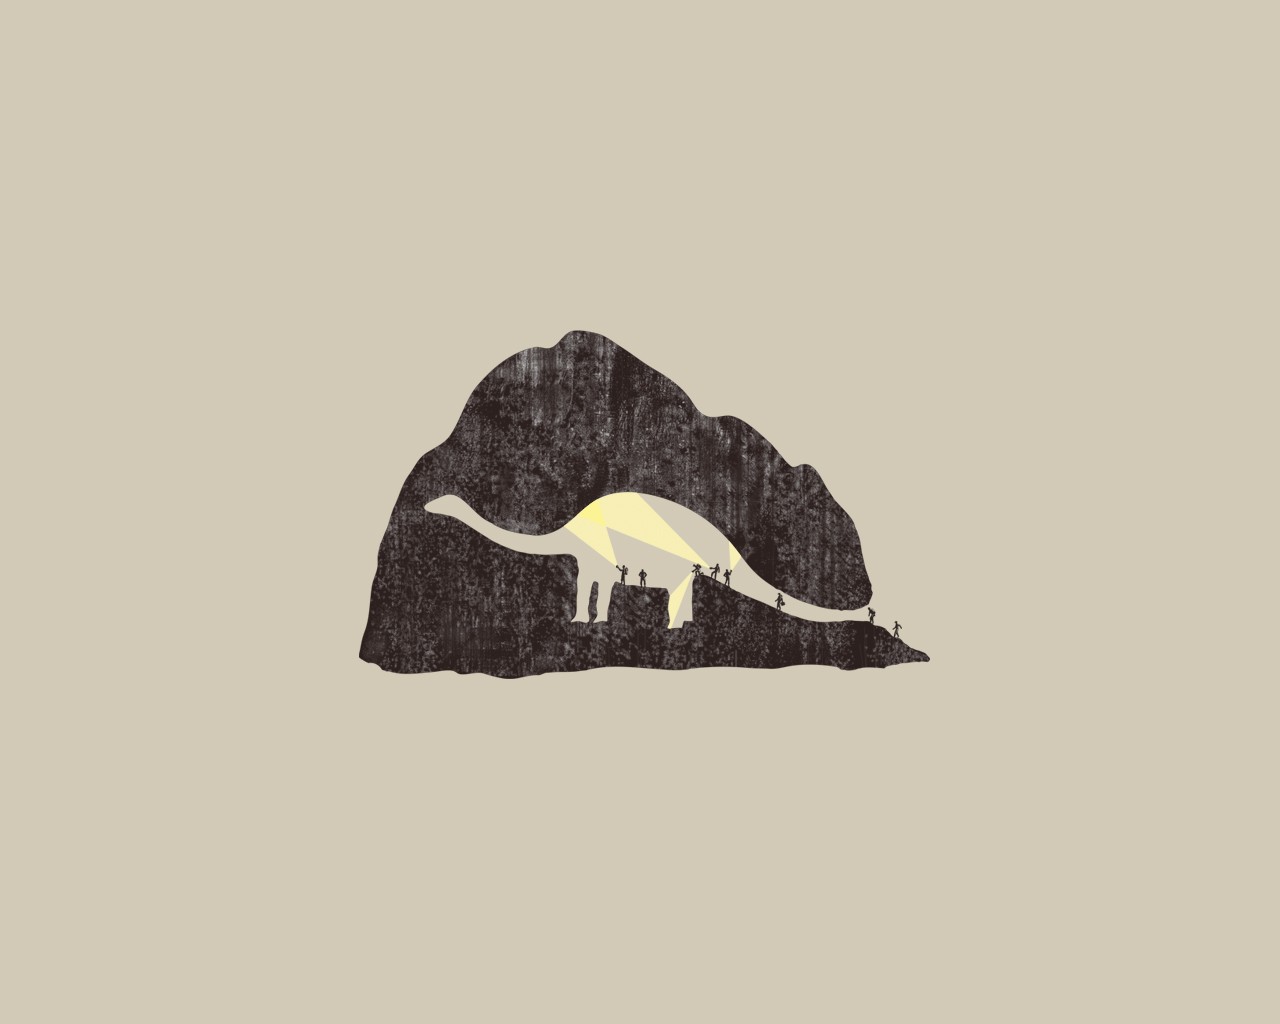 General 1280x1024 minimalism dinosaurs animals simple background artwork